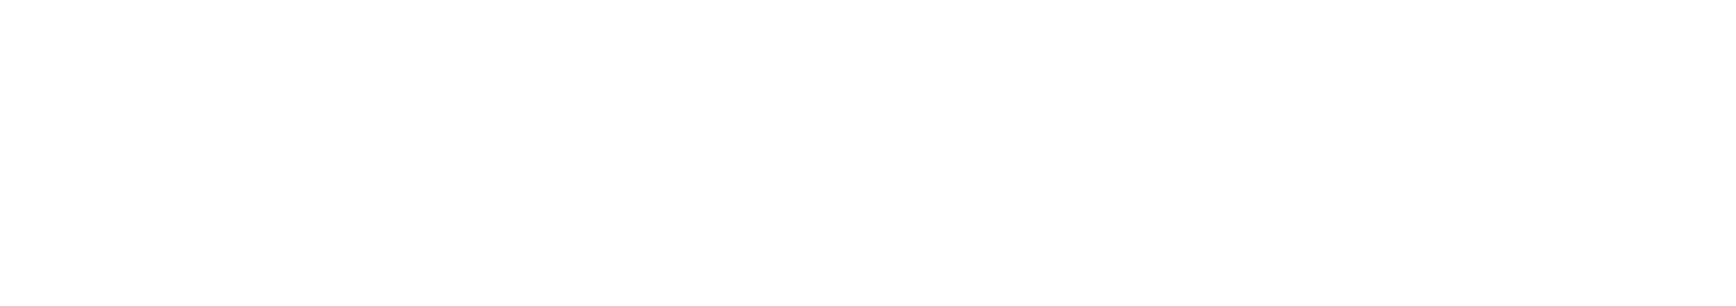 Company Logo White